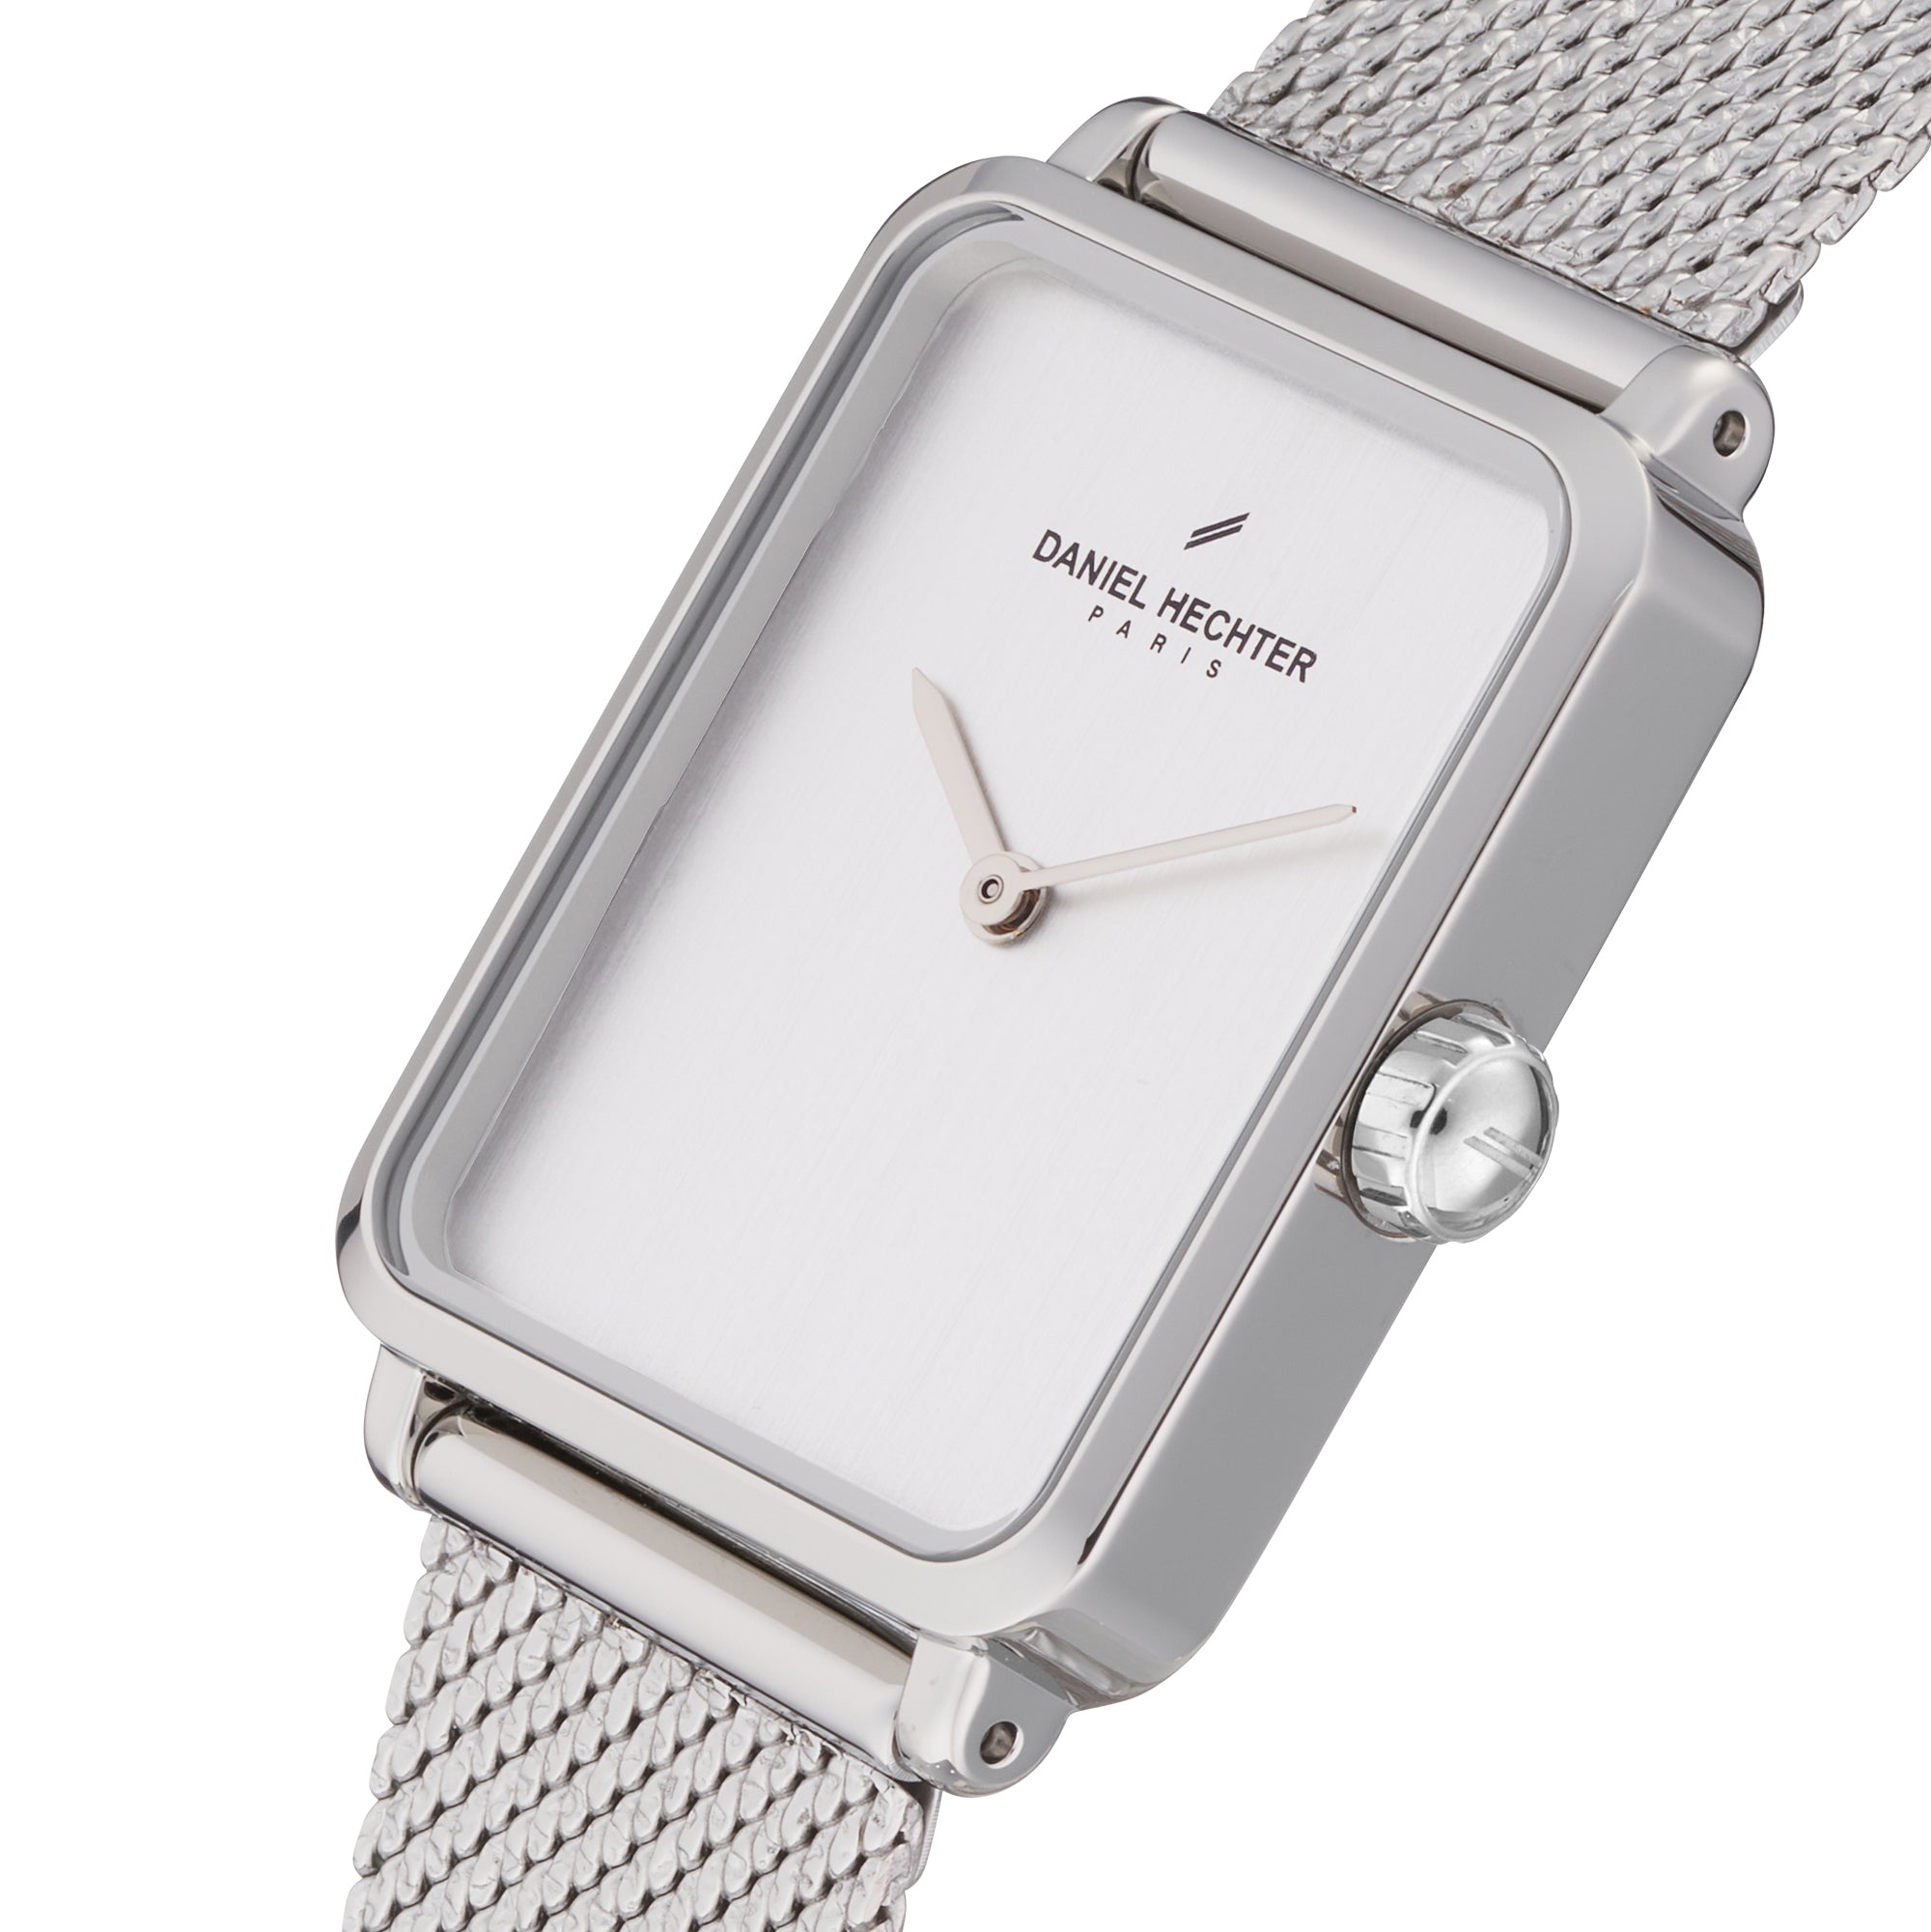 Buy République Strap – Hechter Best Watch Daniel Women Time | Watch Hechter for Daniel